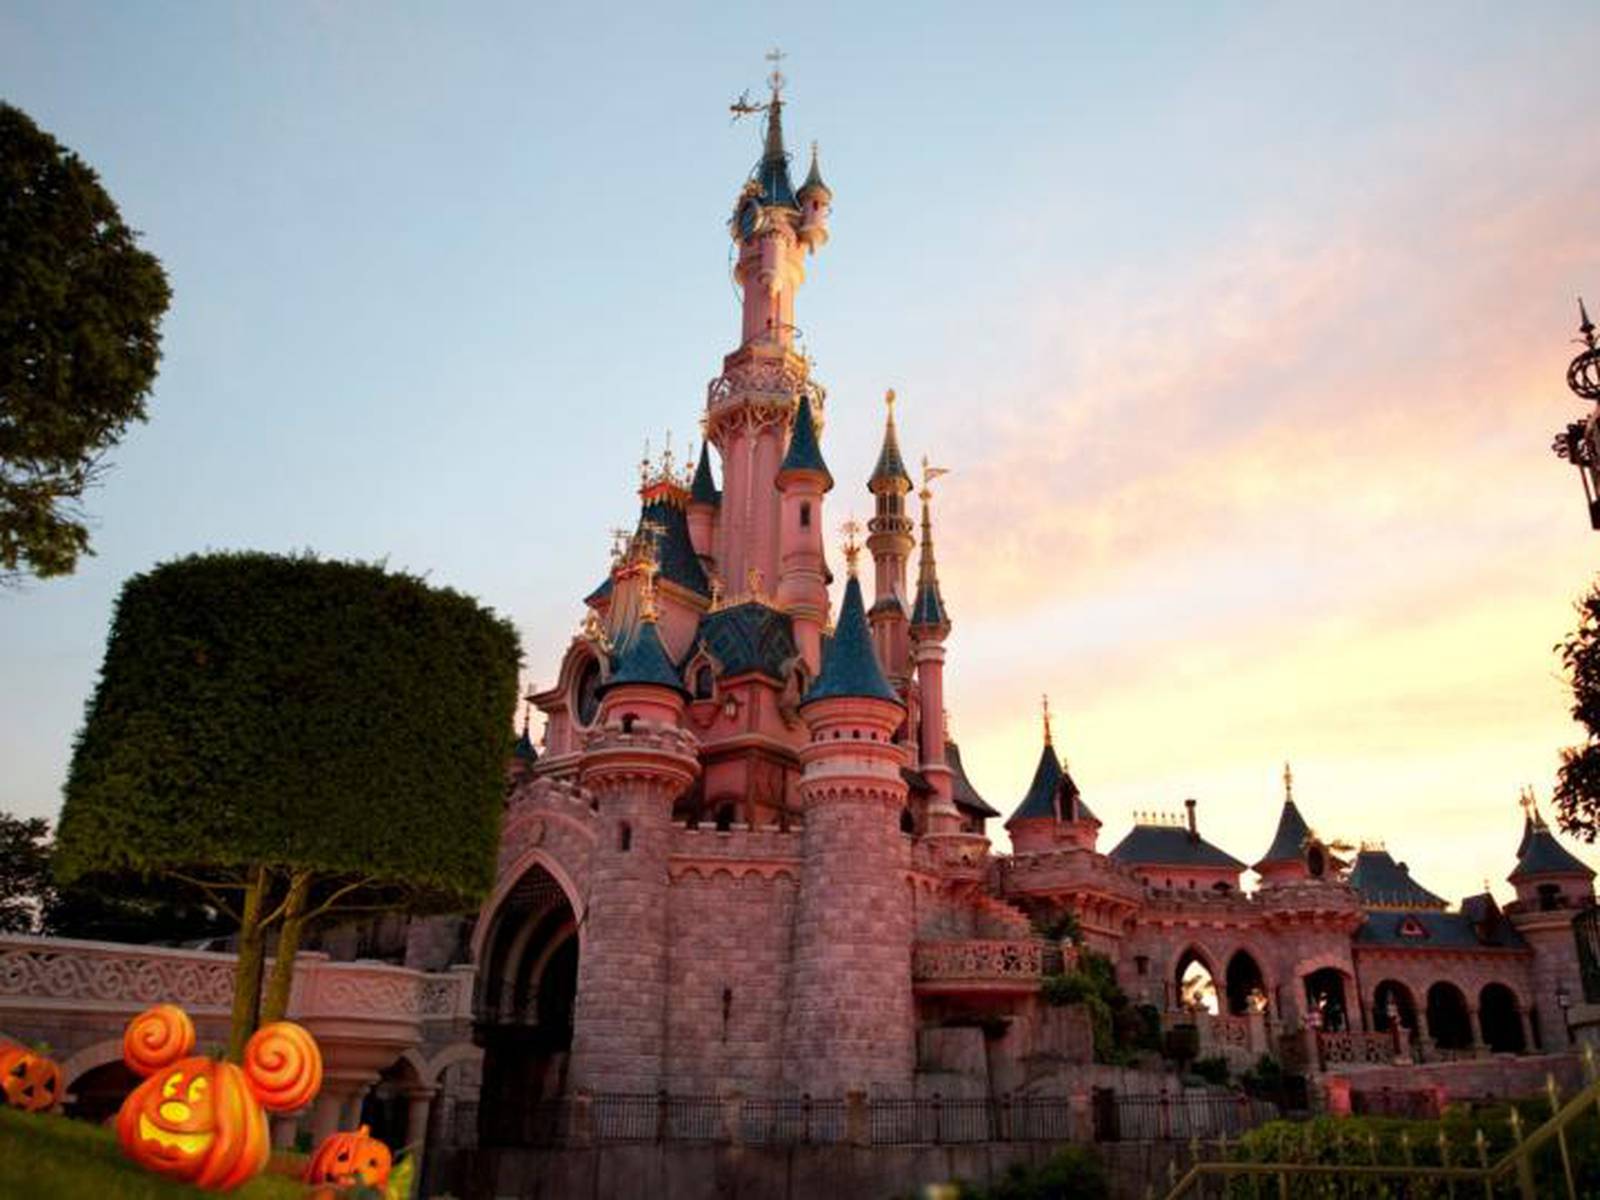 Télécharger - Euro Disney SCA - Disneyland® Paris